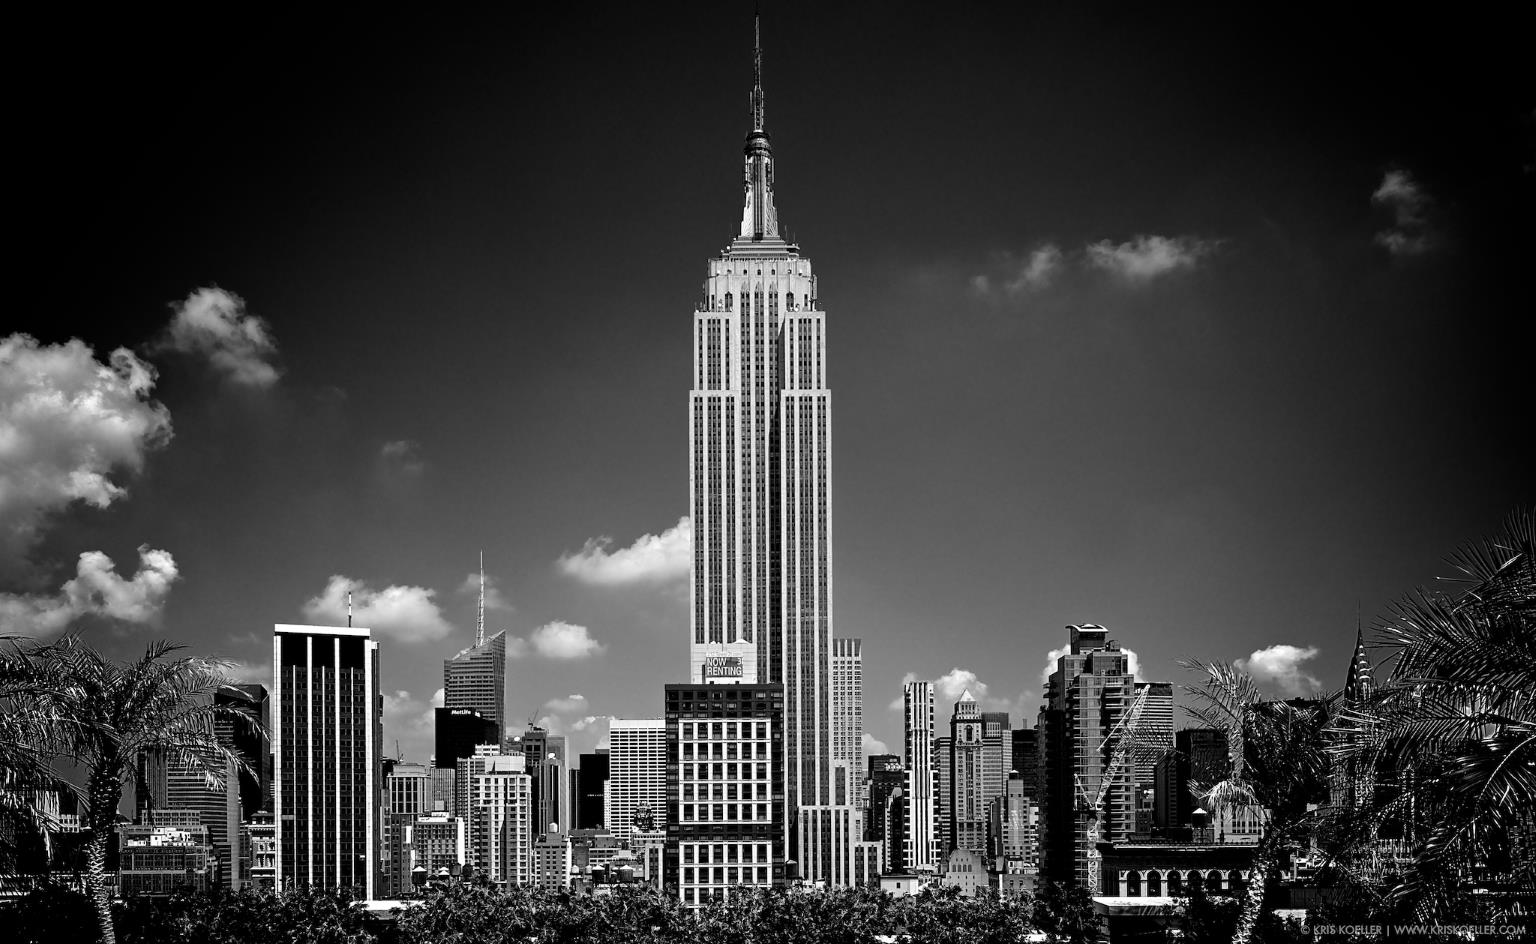 H Ιστορία του CrowdFunding 1961 Συγκροτείται η κτηματομεσιτική κοινοπραξία Empire State Building Associates με σκοπό την εξαγορά του